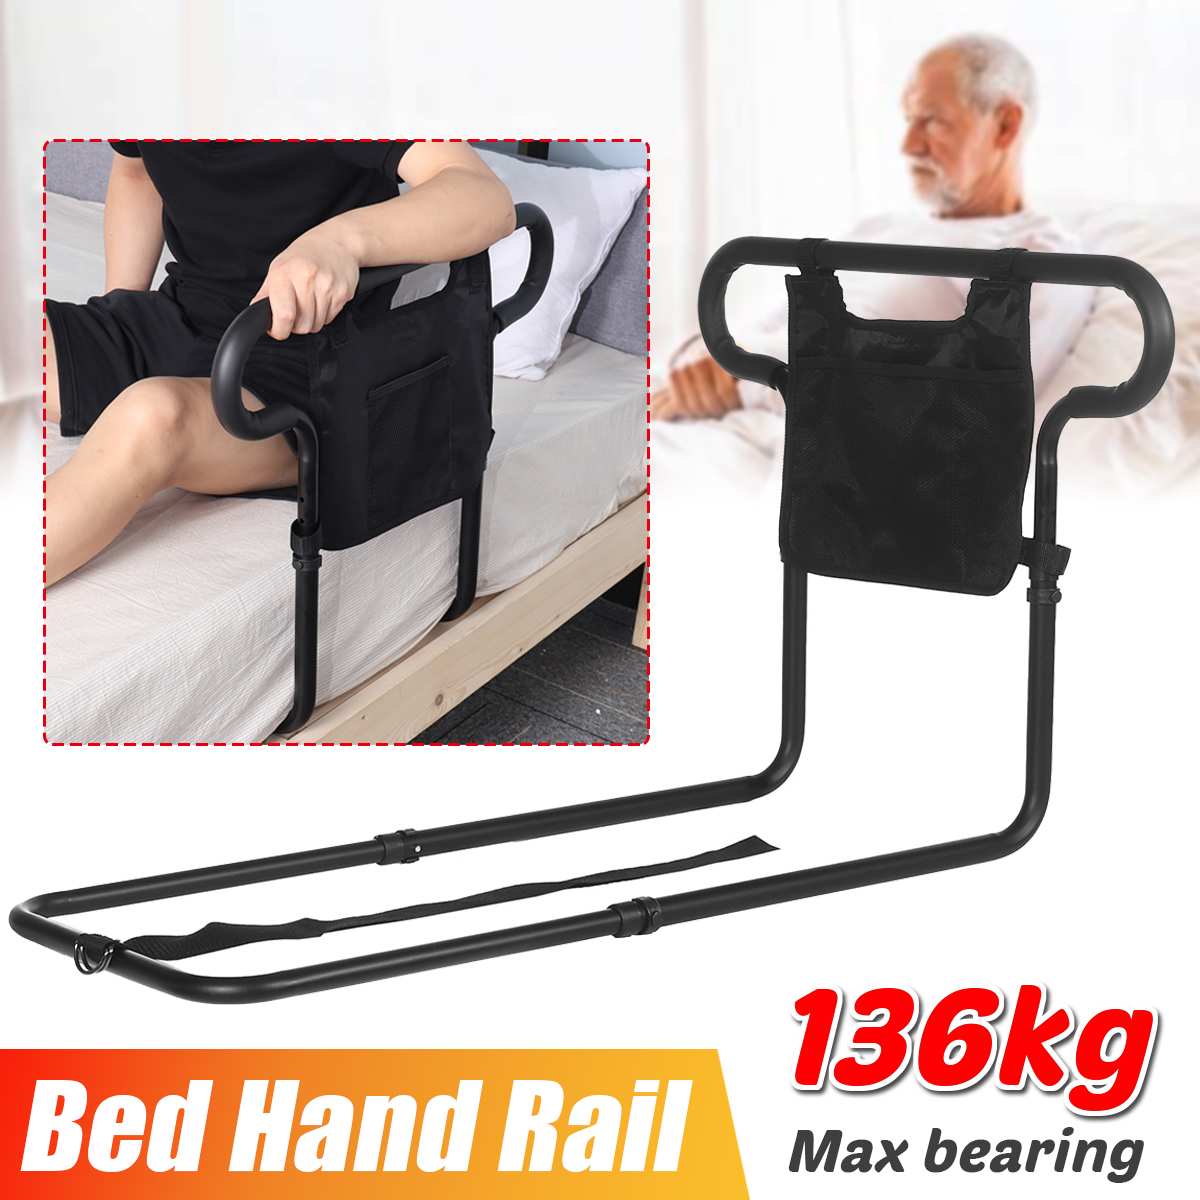 Adjustable Bed Hand Rail for Assisting Elderly